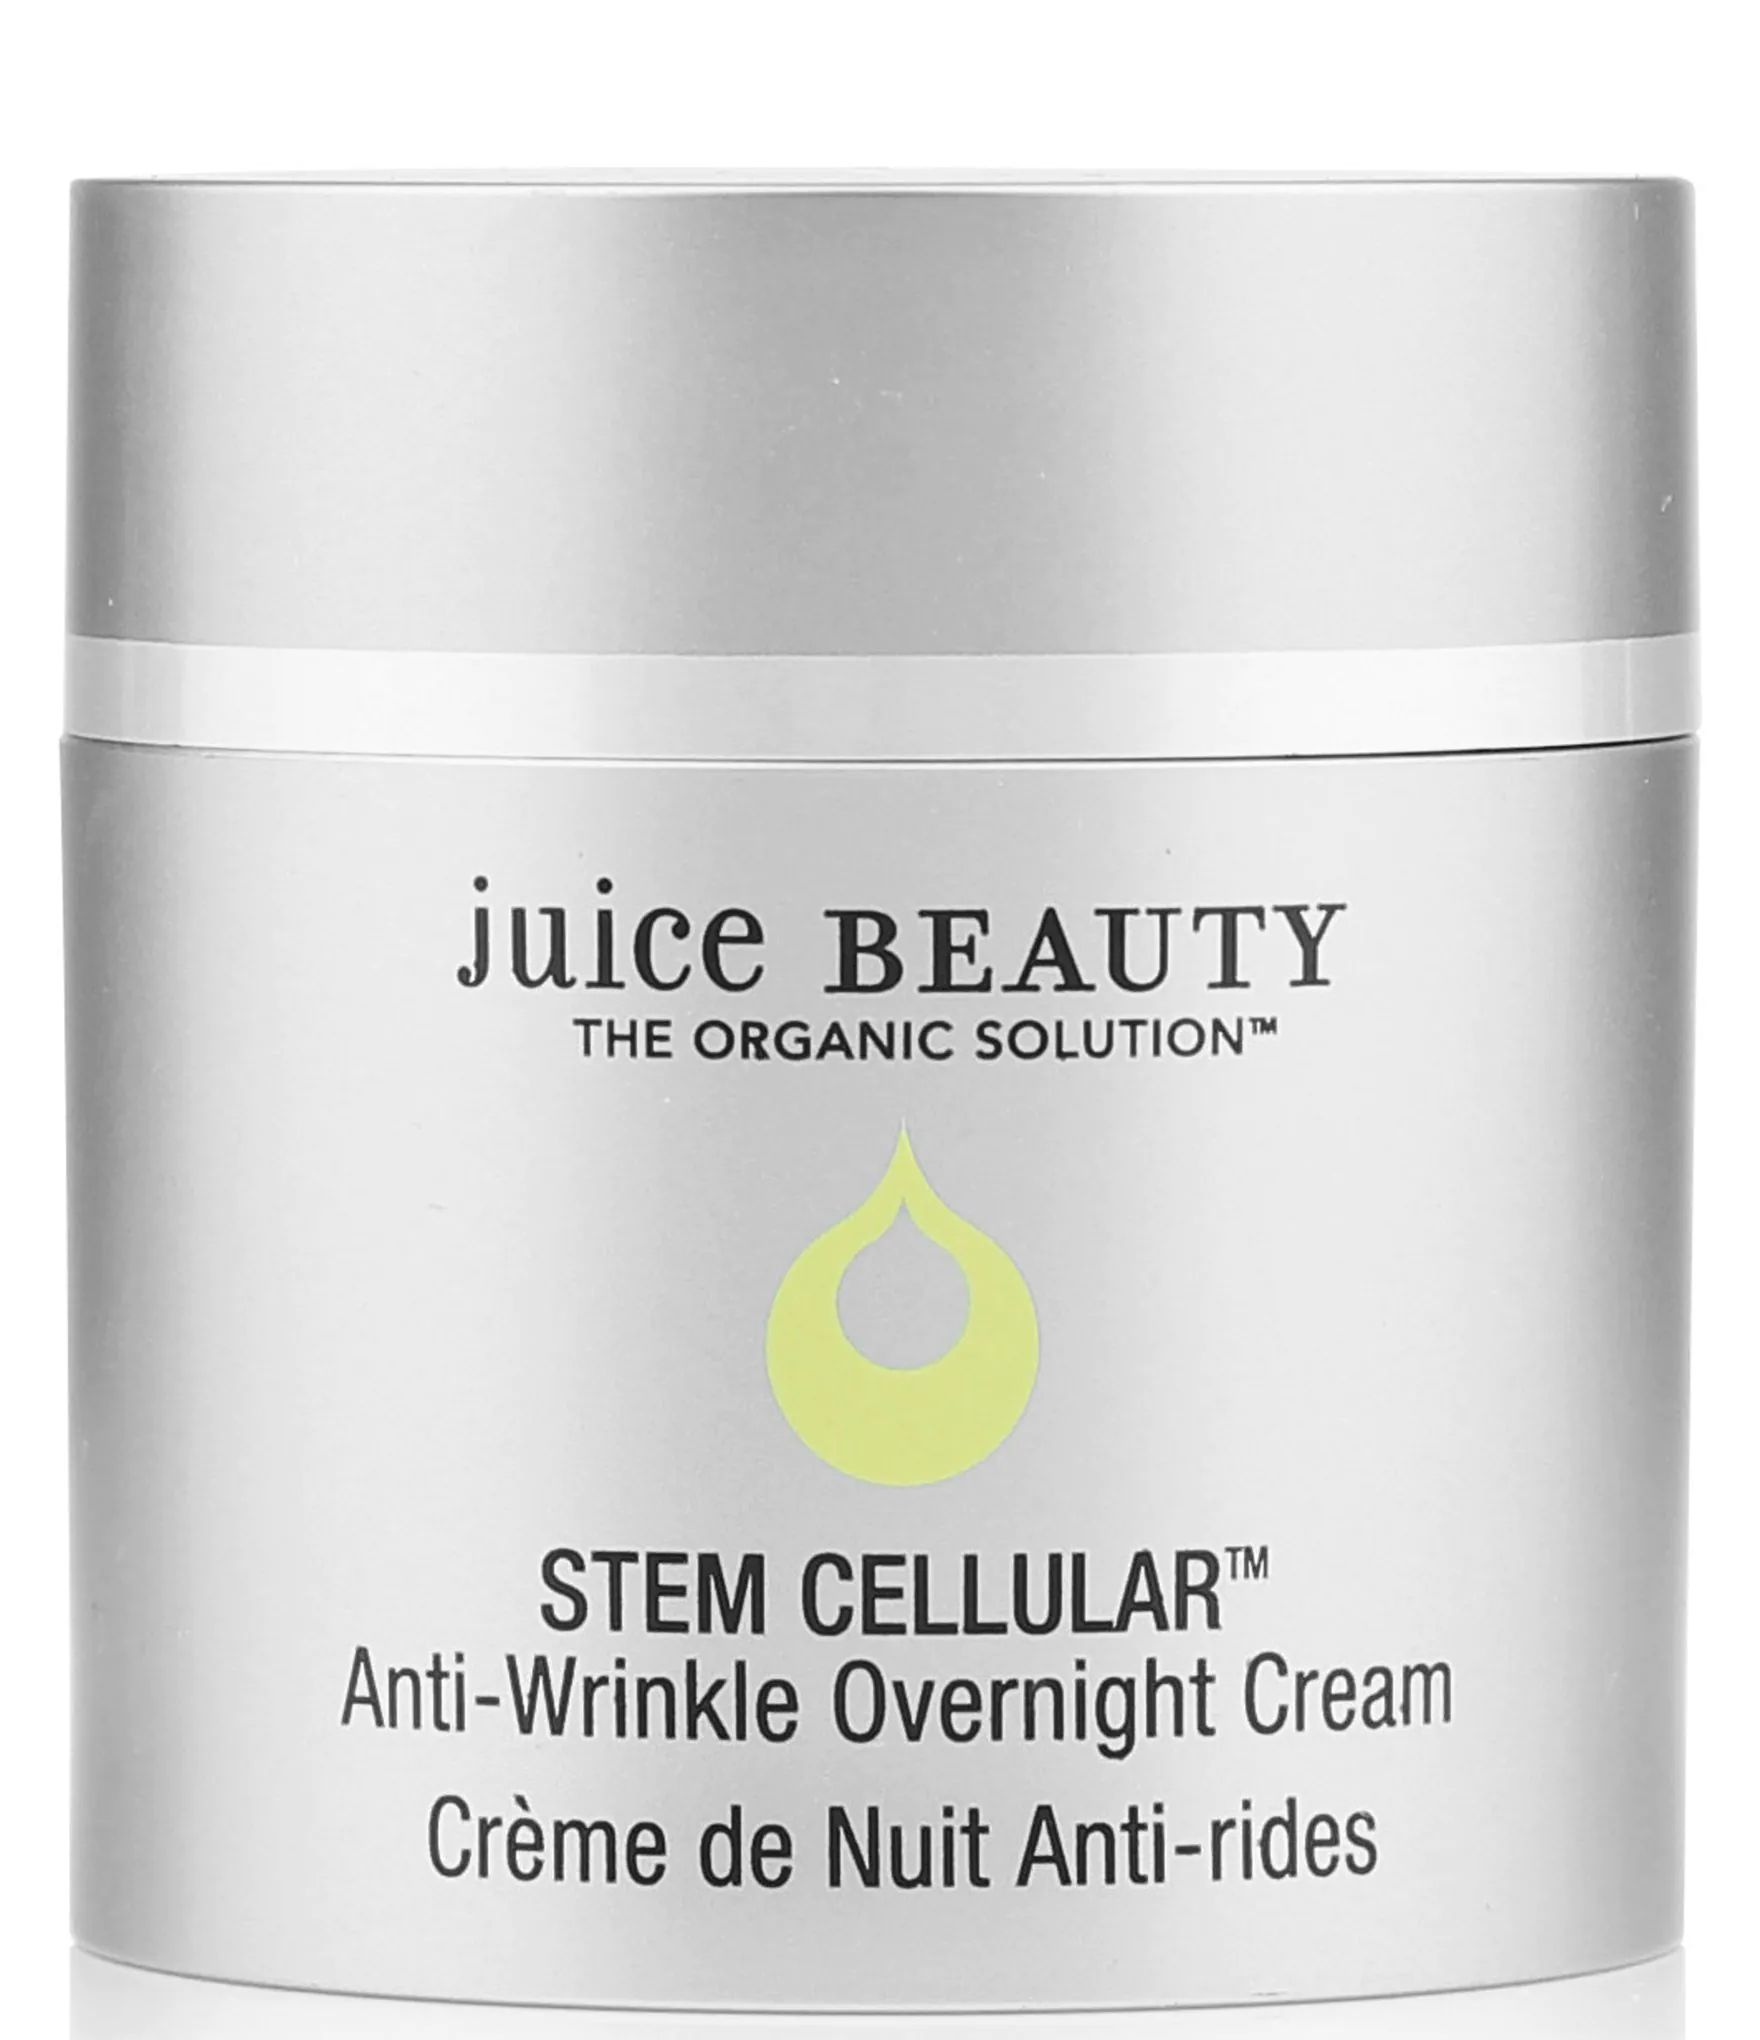 STEM CELLULAR Anti-Wrinkle Overnight Cream | Dillard's